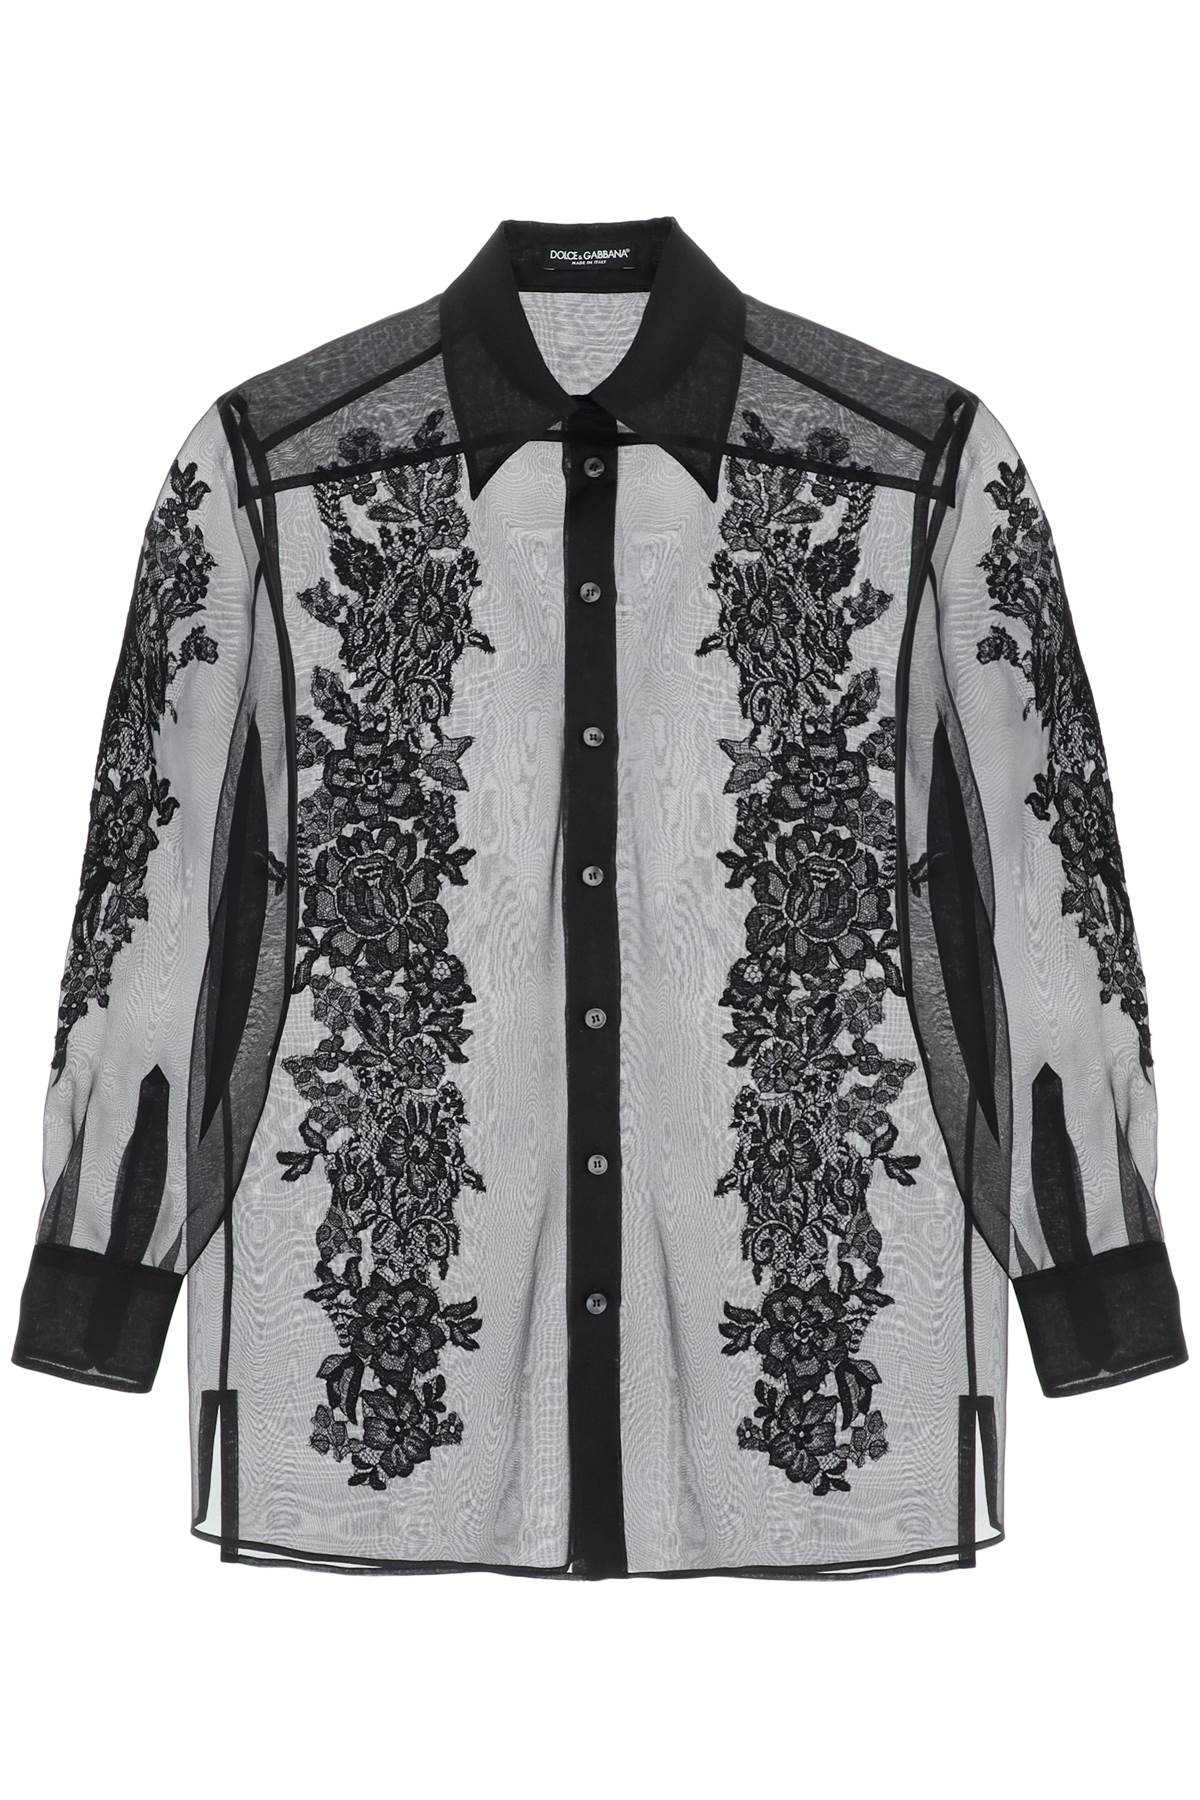 Dolce & gabbana organza shirt with lace inserts-0